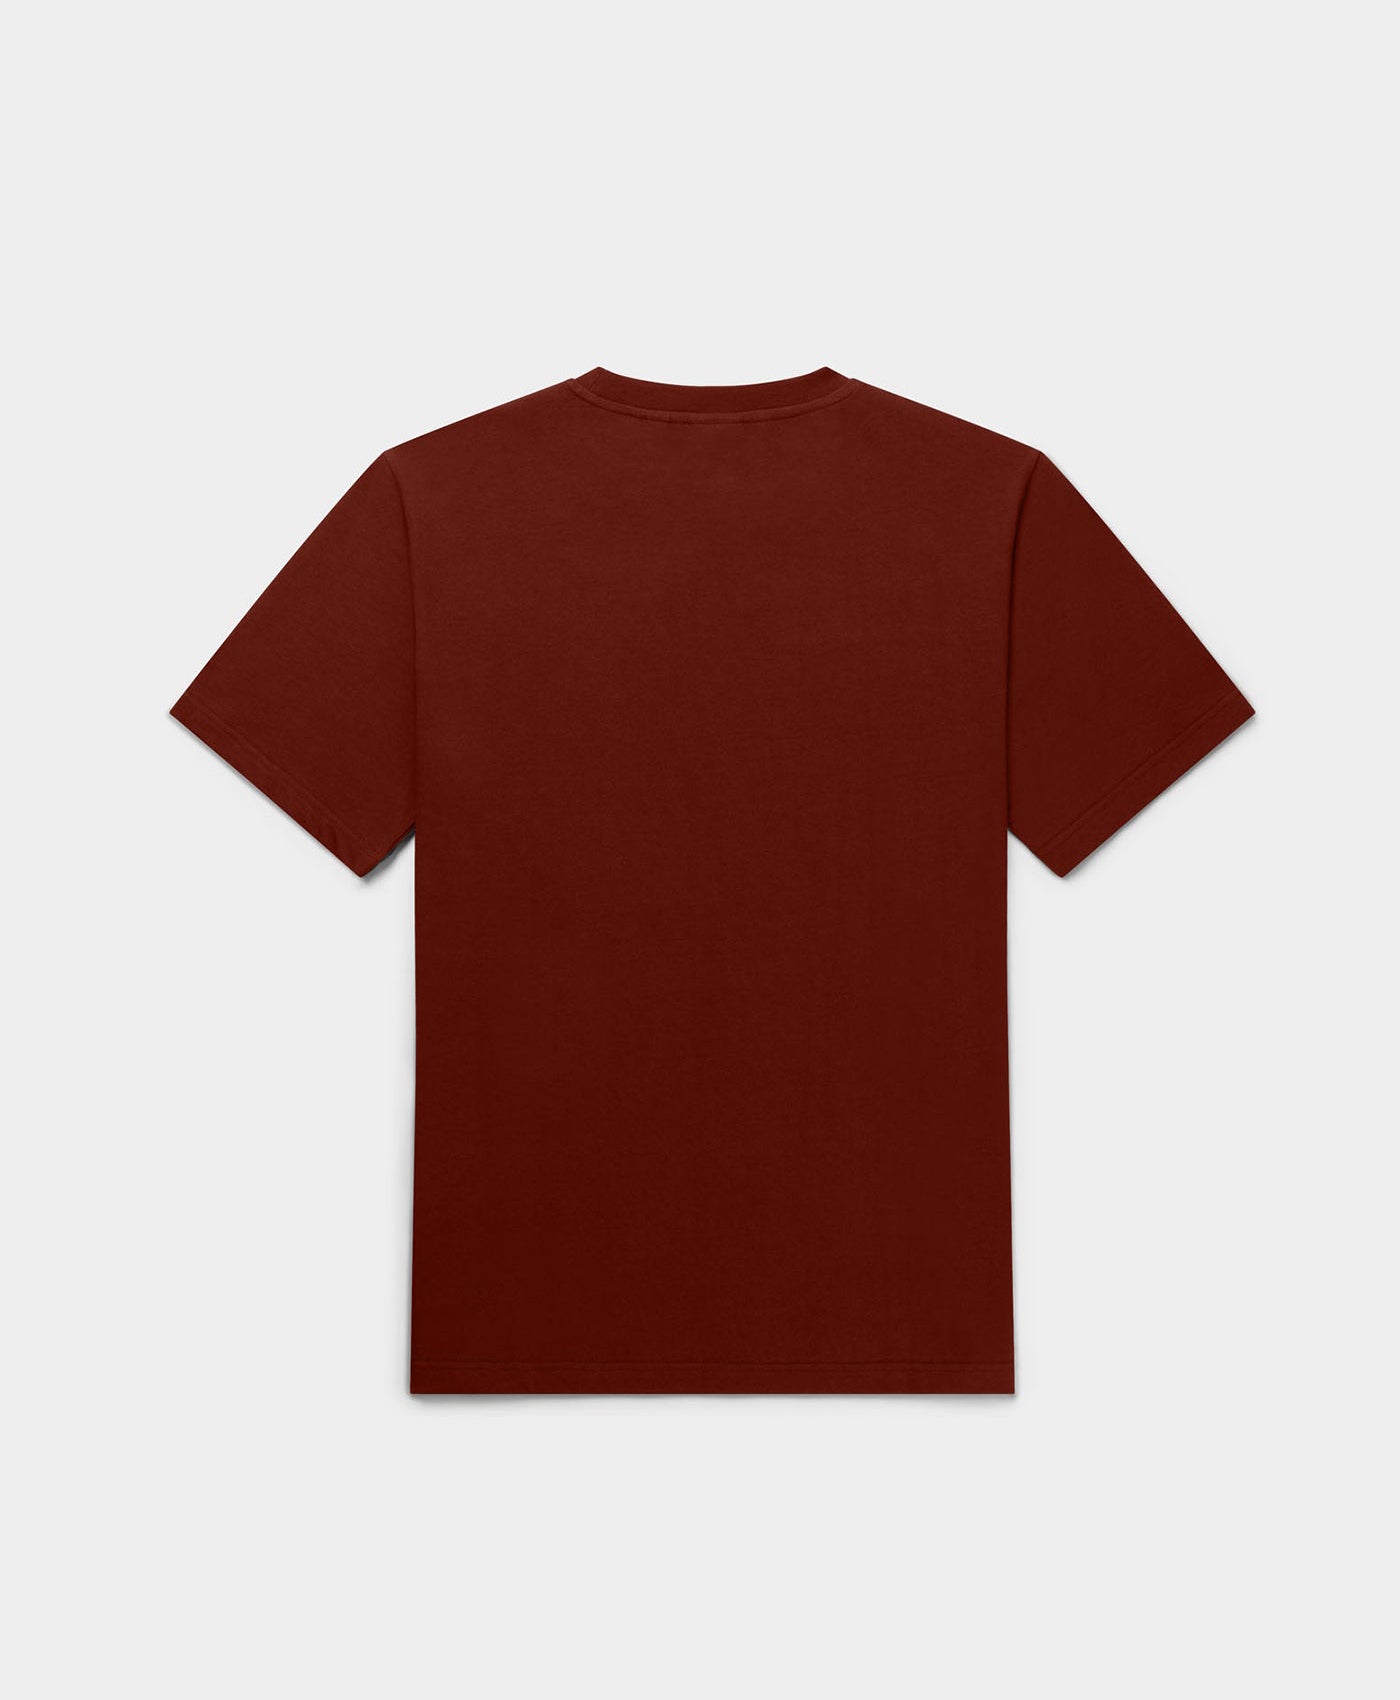 DP - Fiery Brick Red Nakato T-Shirt - Packshot - Rear